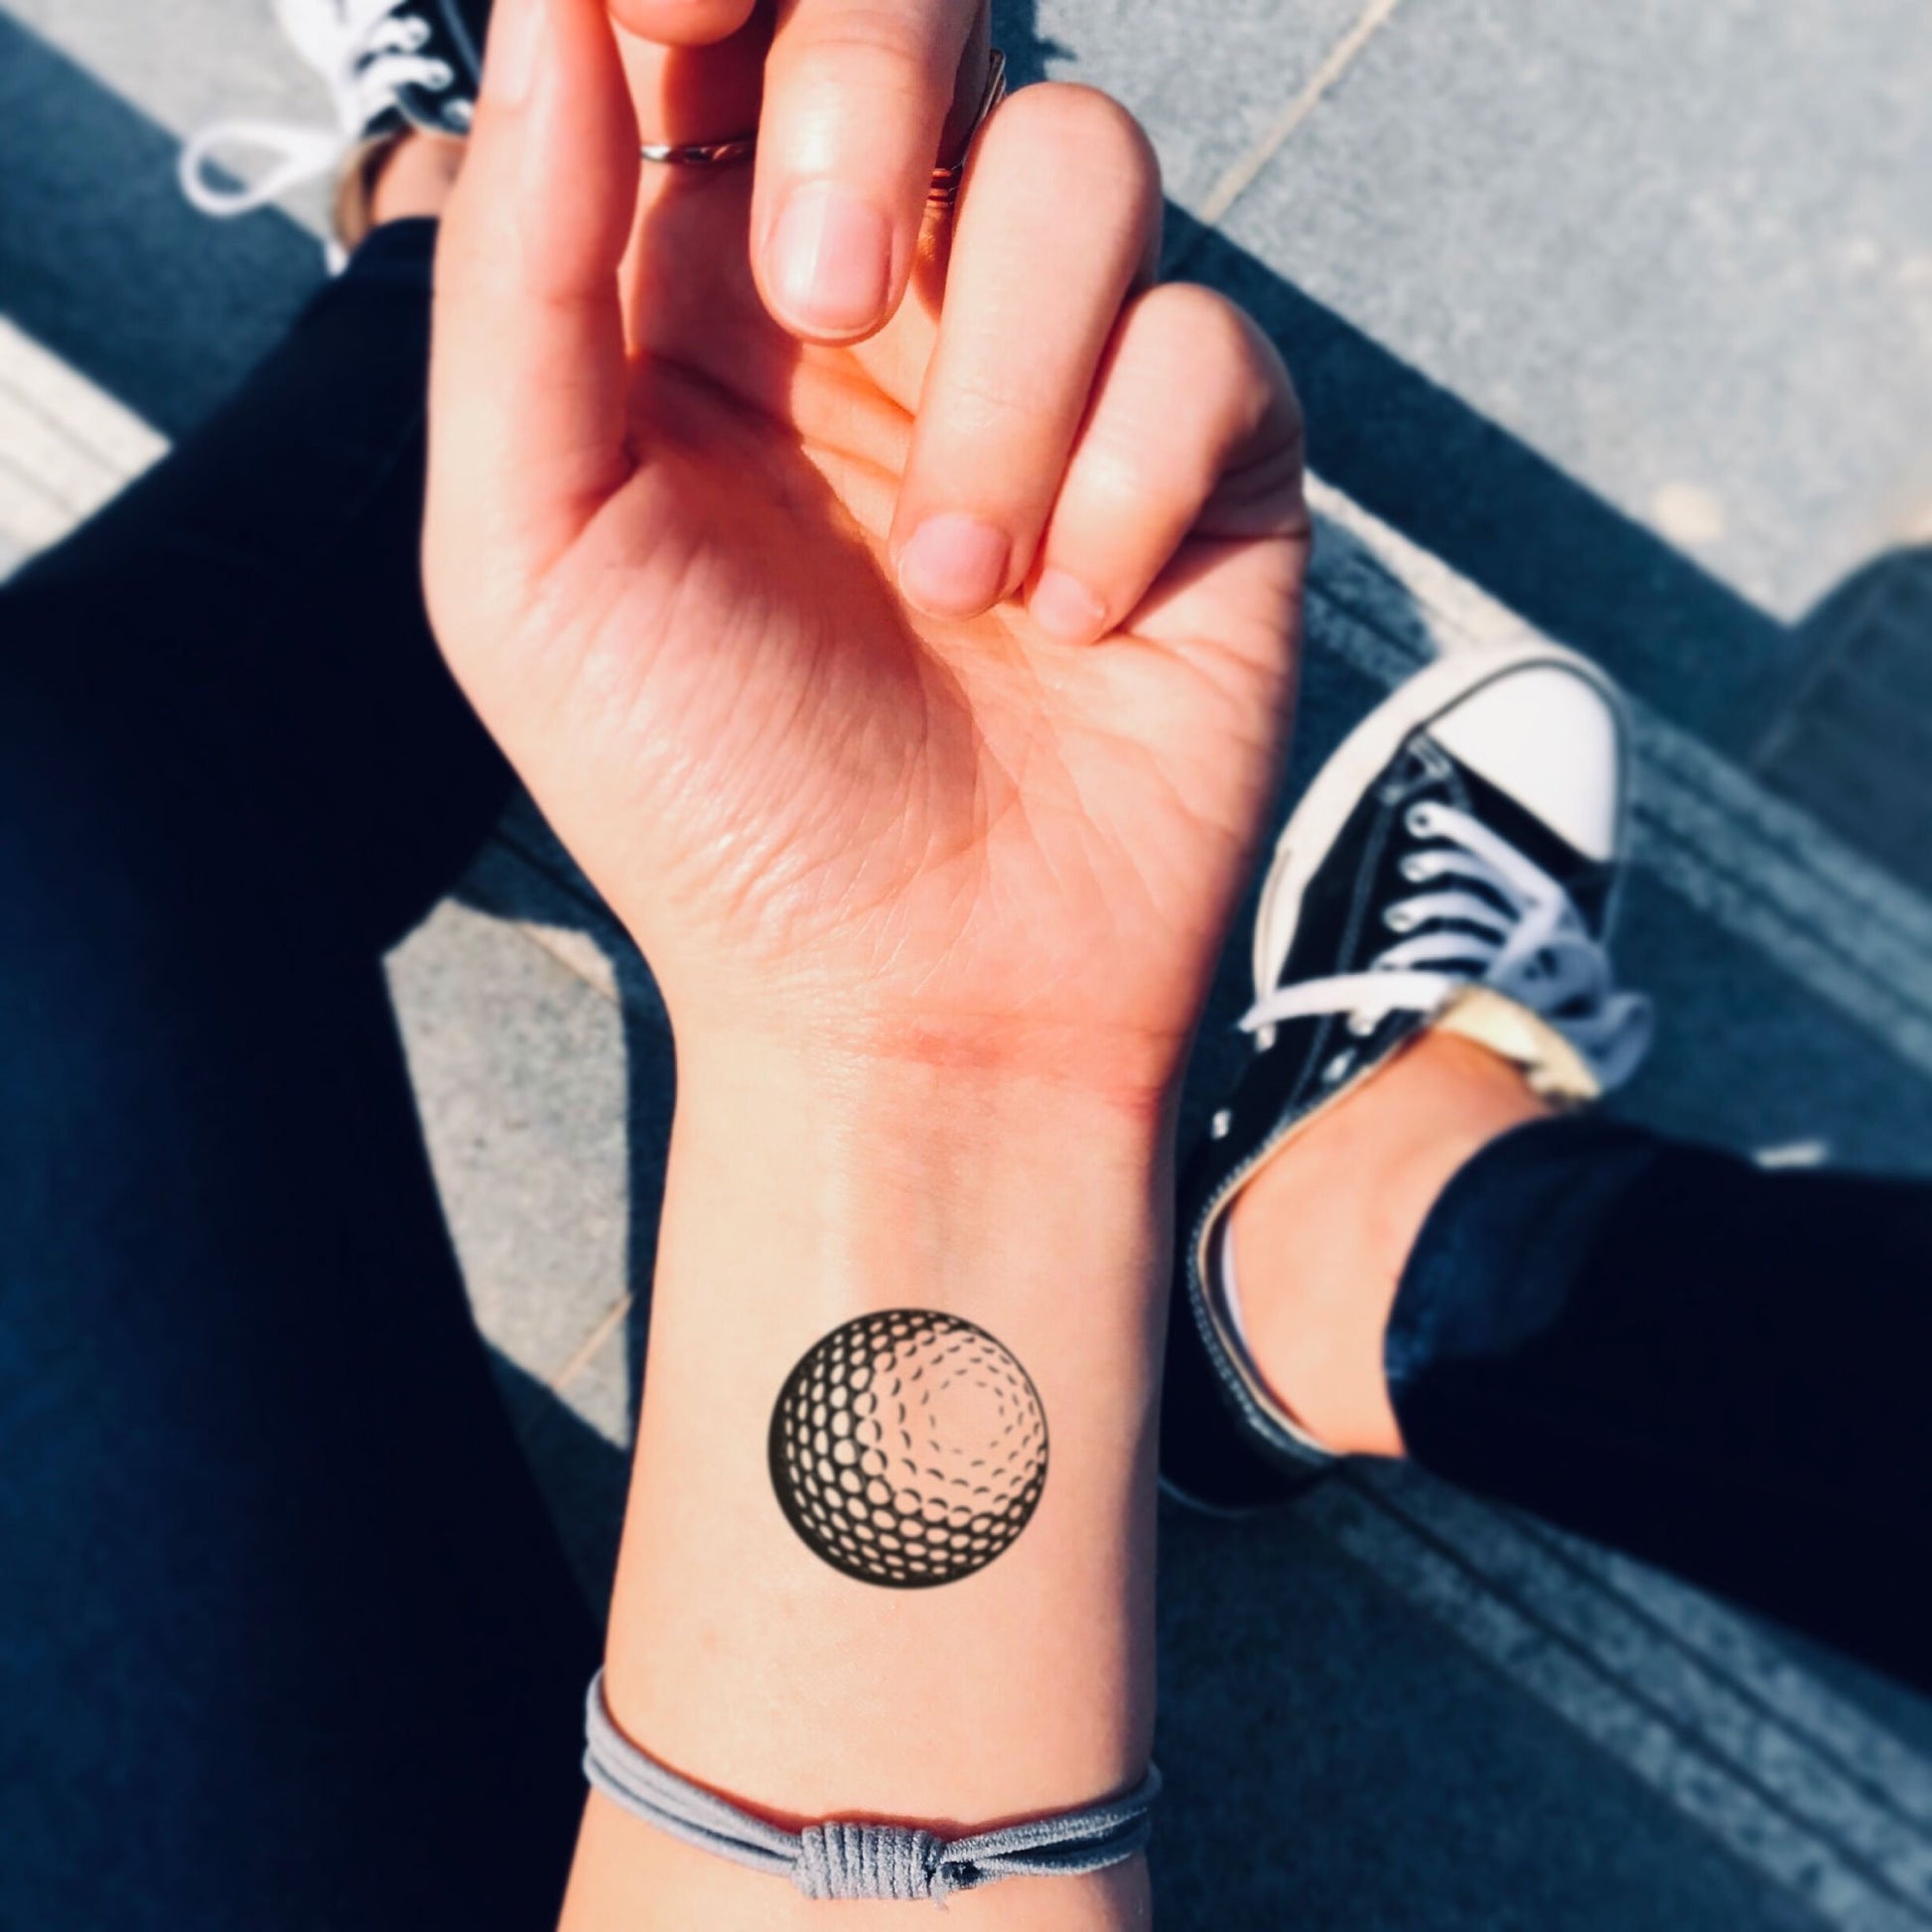 fake small golf ball minimalist temporary tattoo sticker design idea on wrist